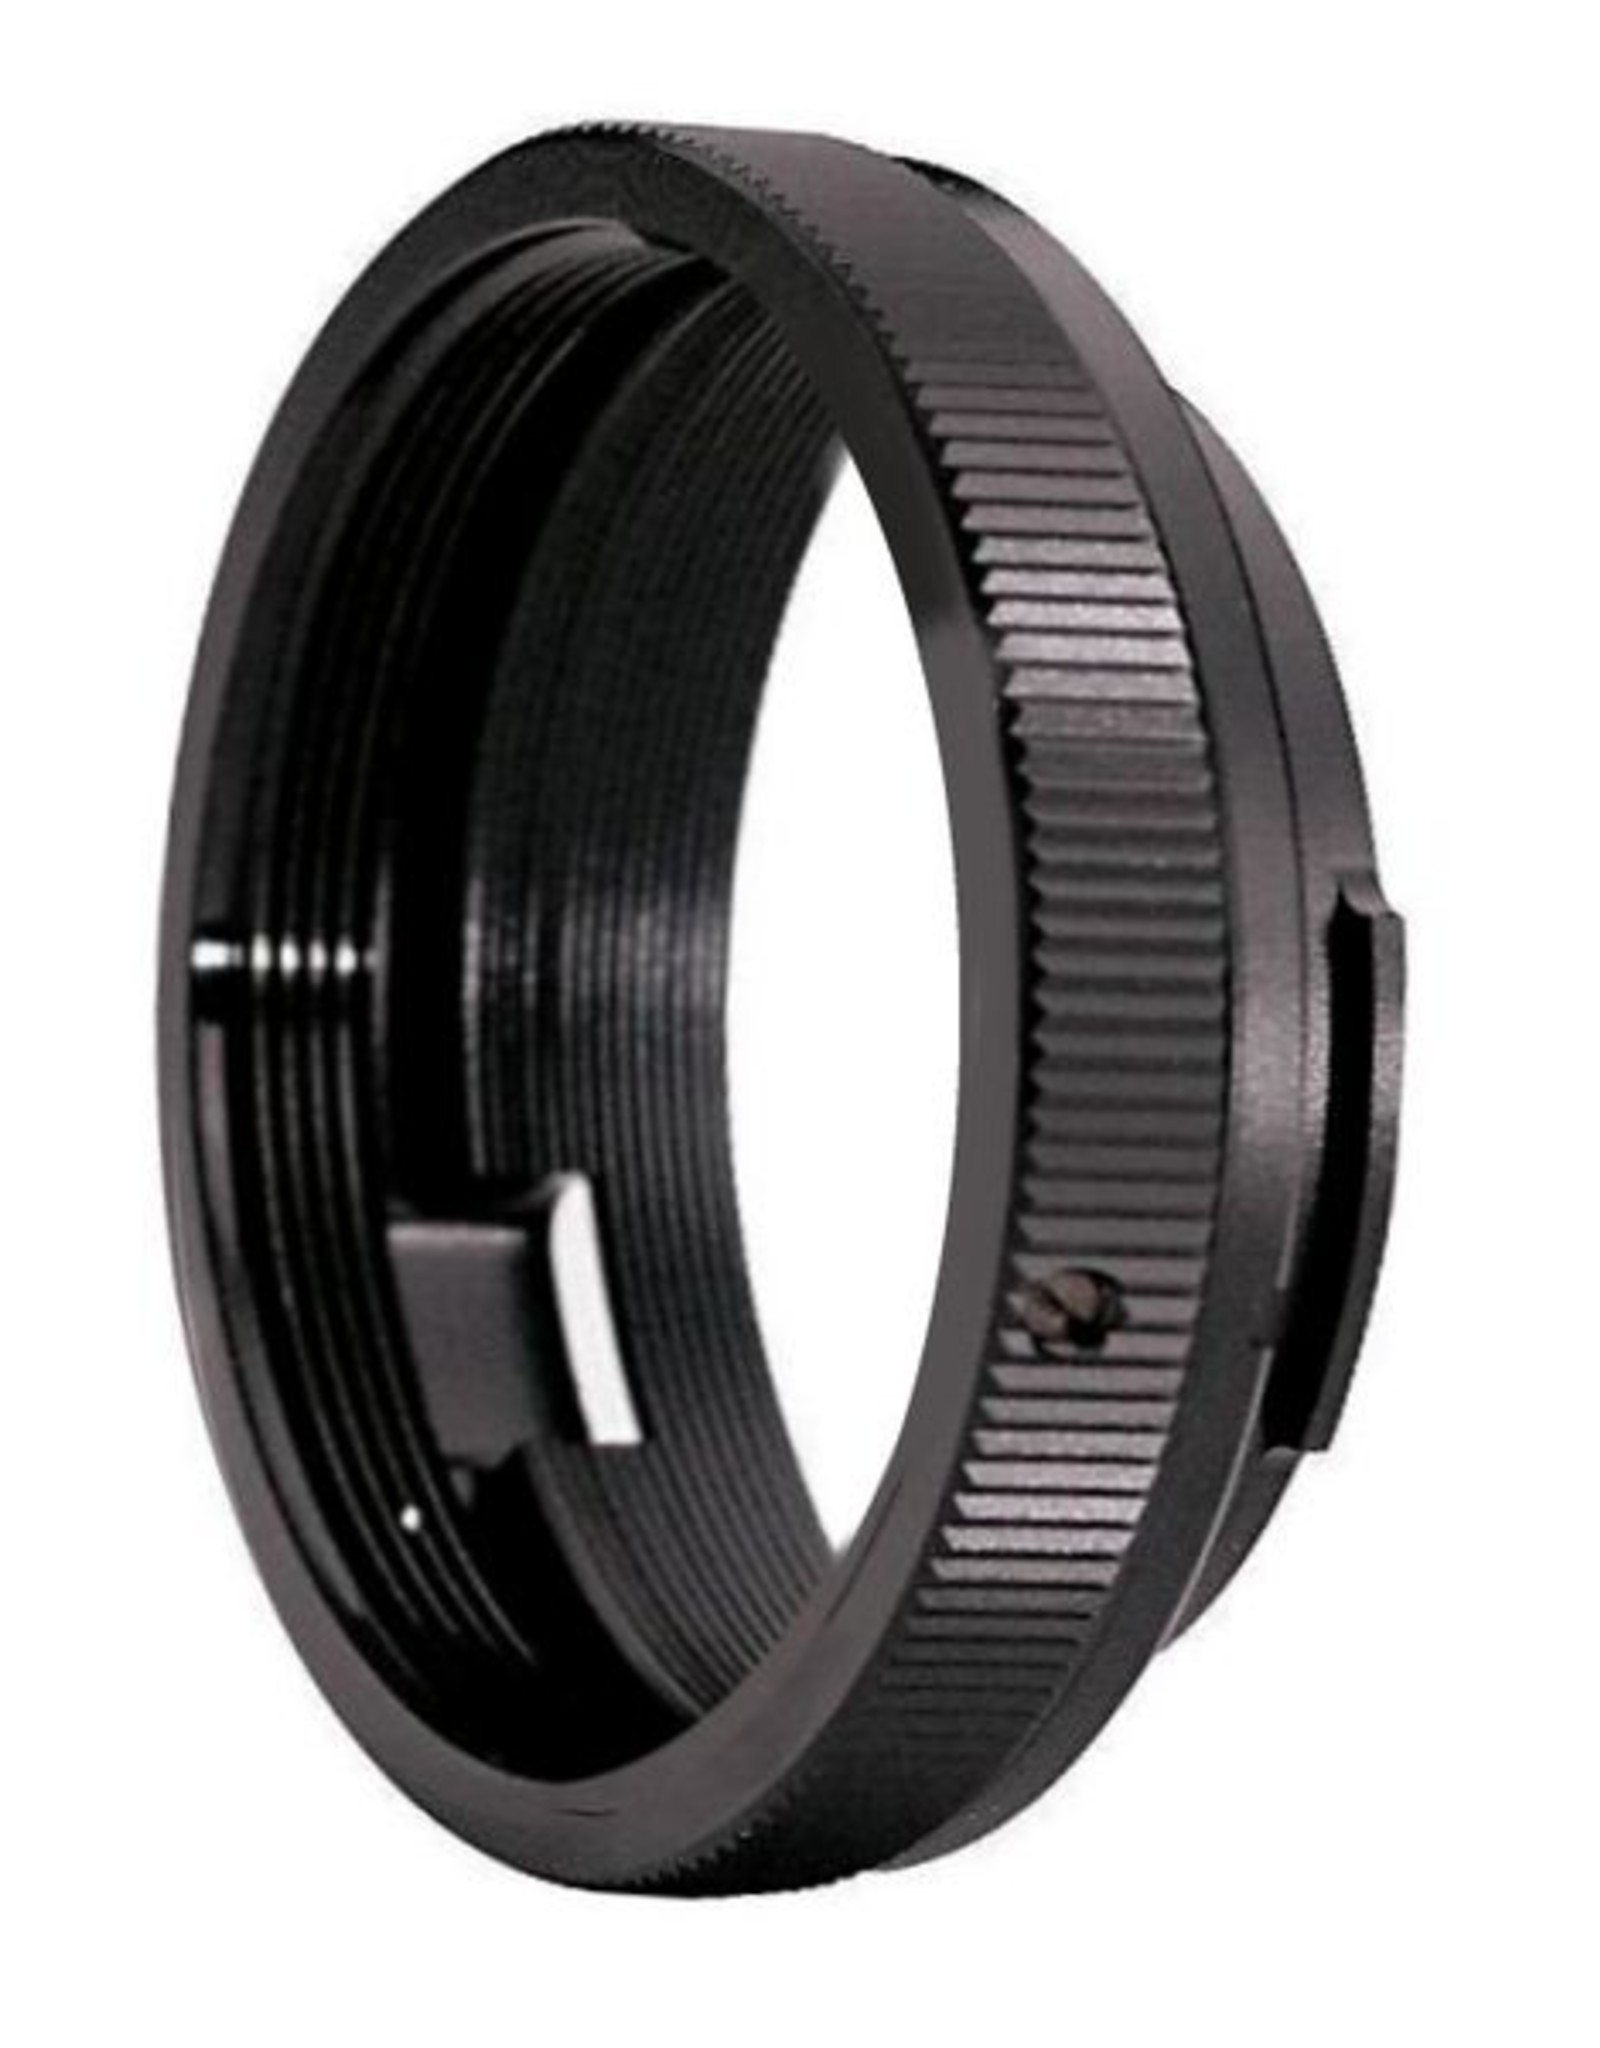 Nikon DSLR Wide T Mount Adapter Ring  - 48 mm